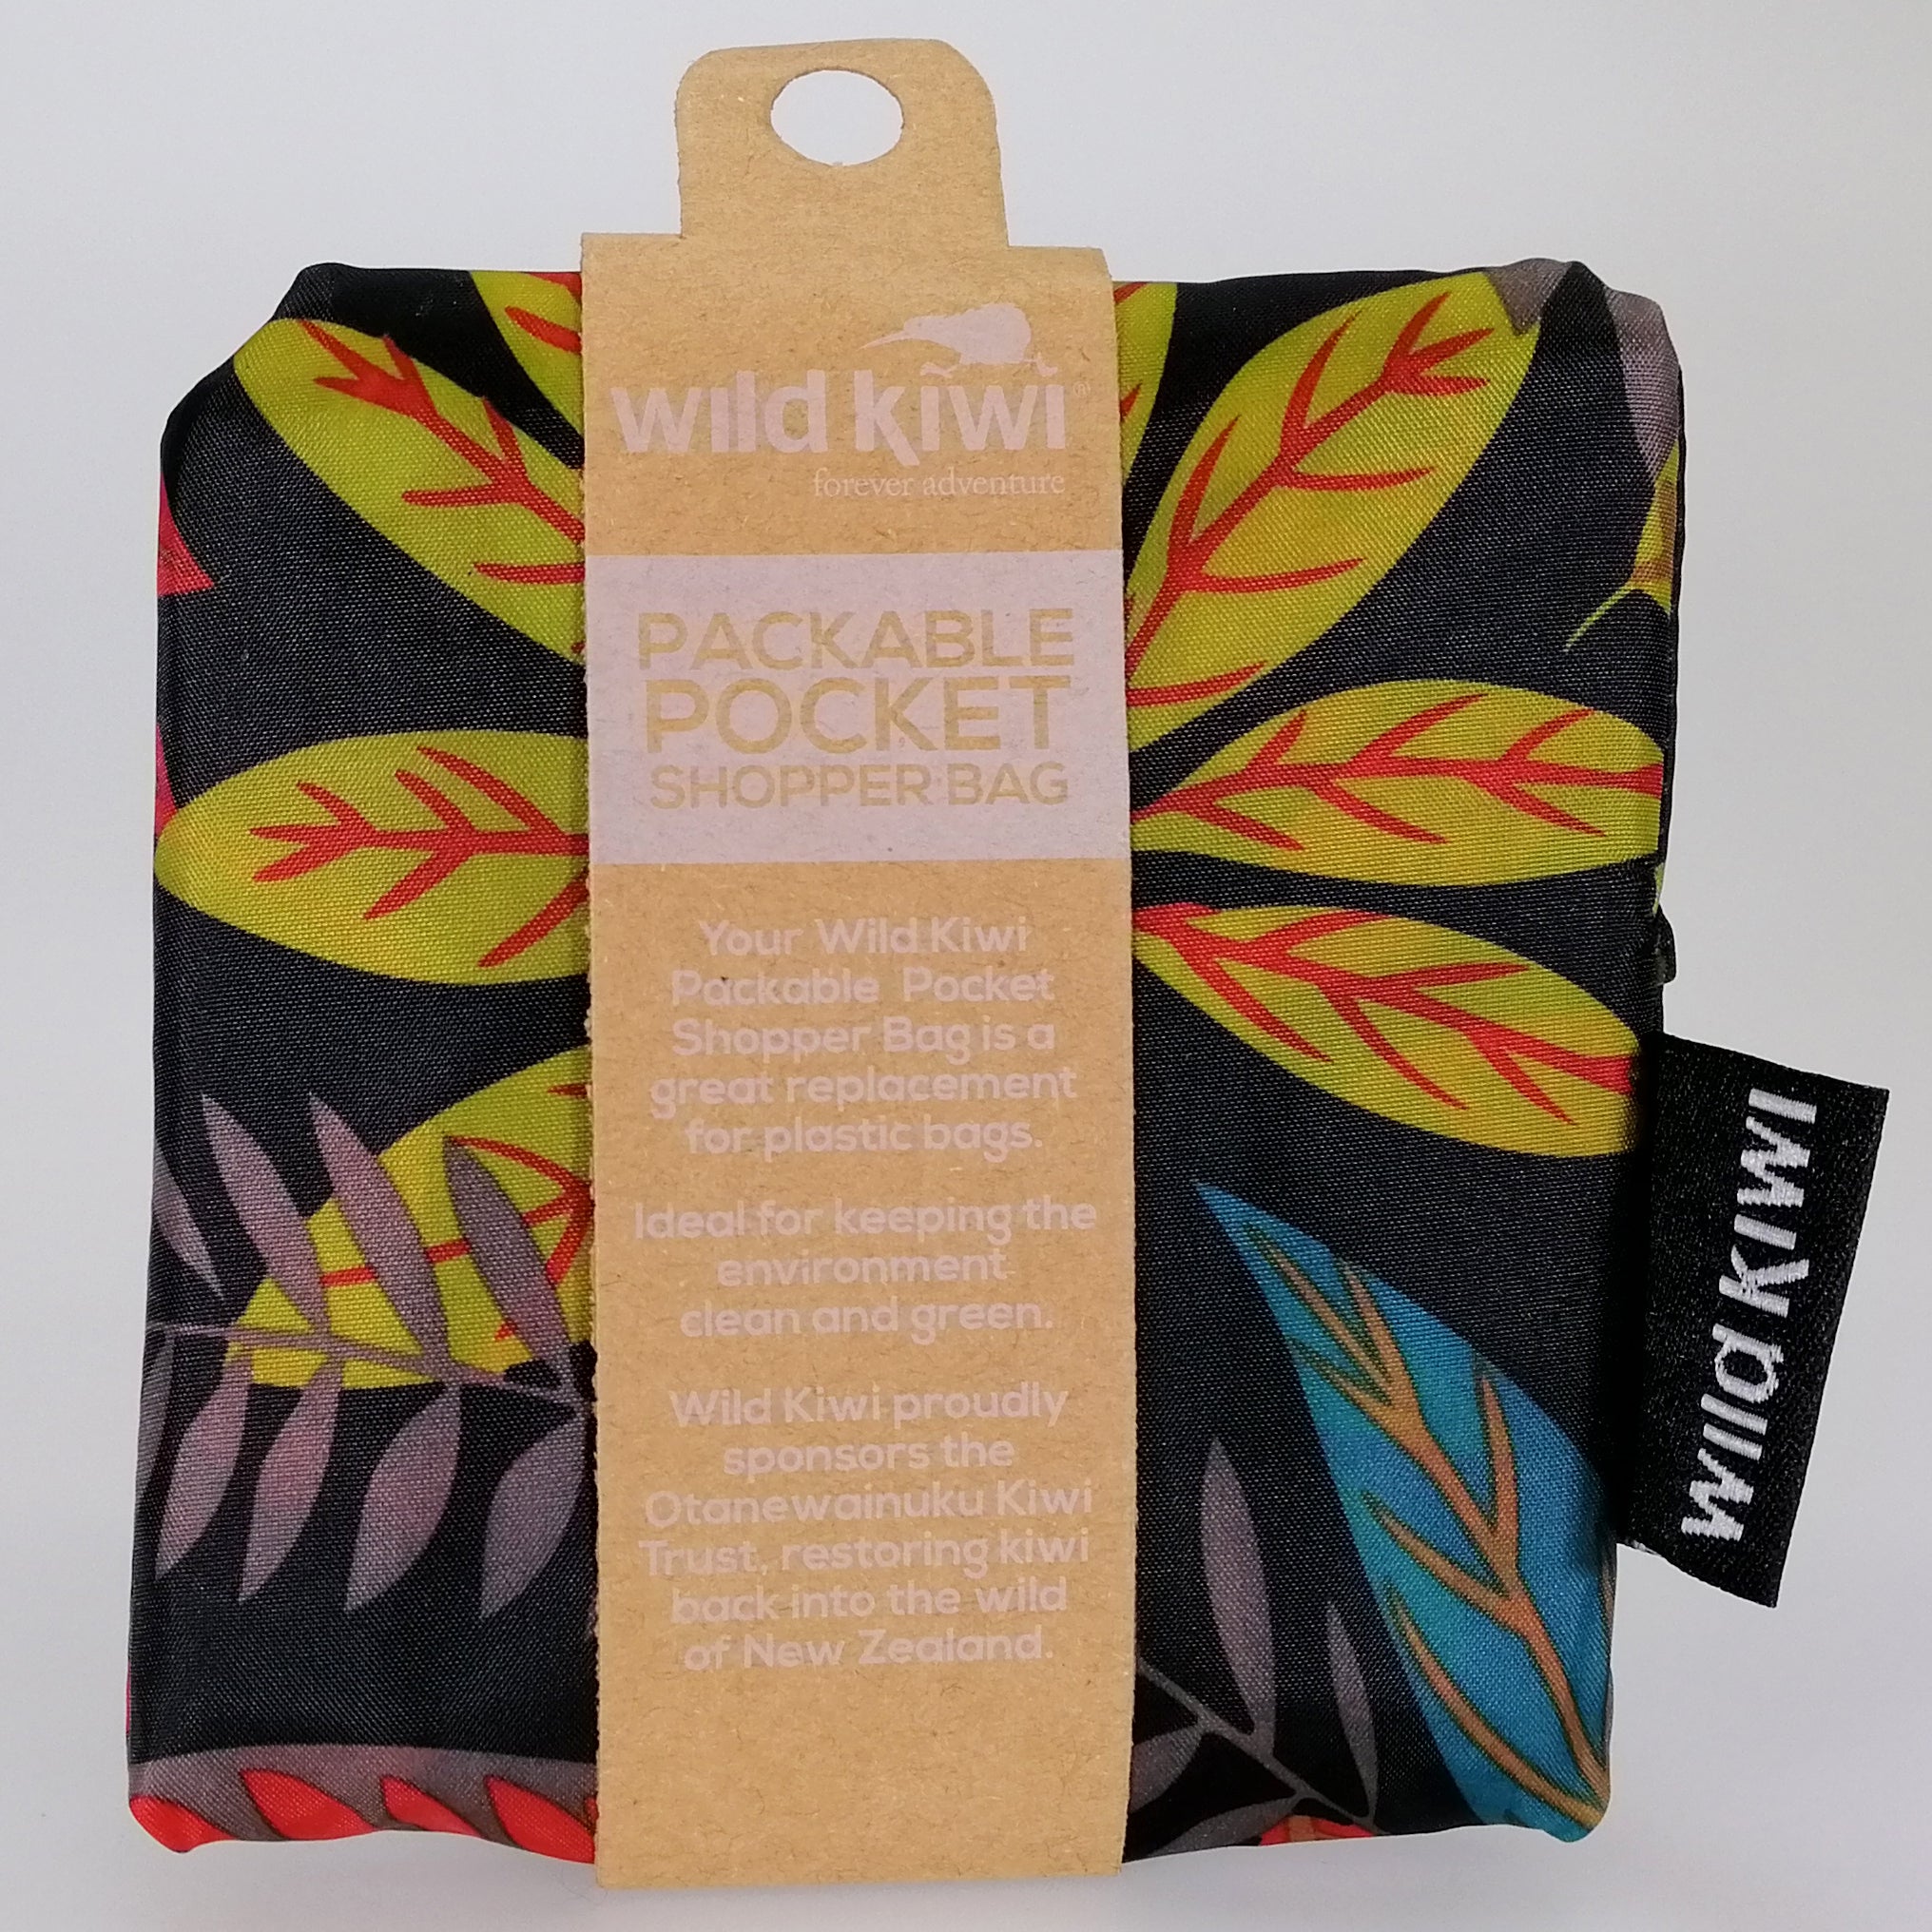 Wild Kiwi Packable Pocket Shopping Bag - Ferns